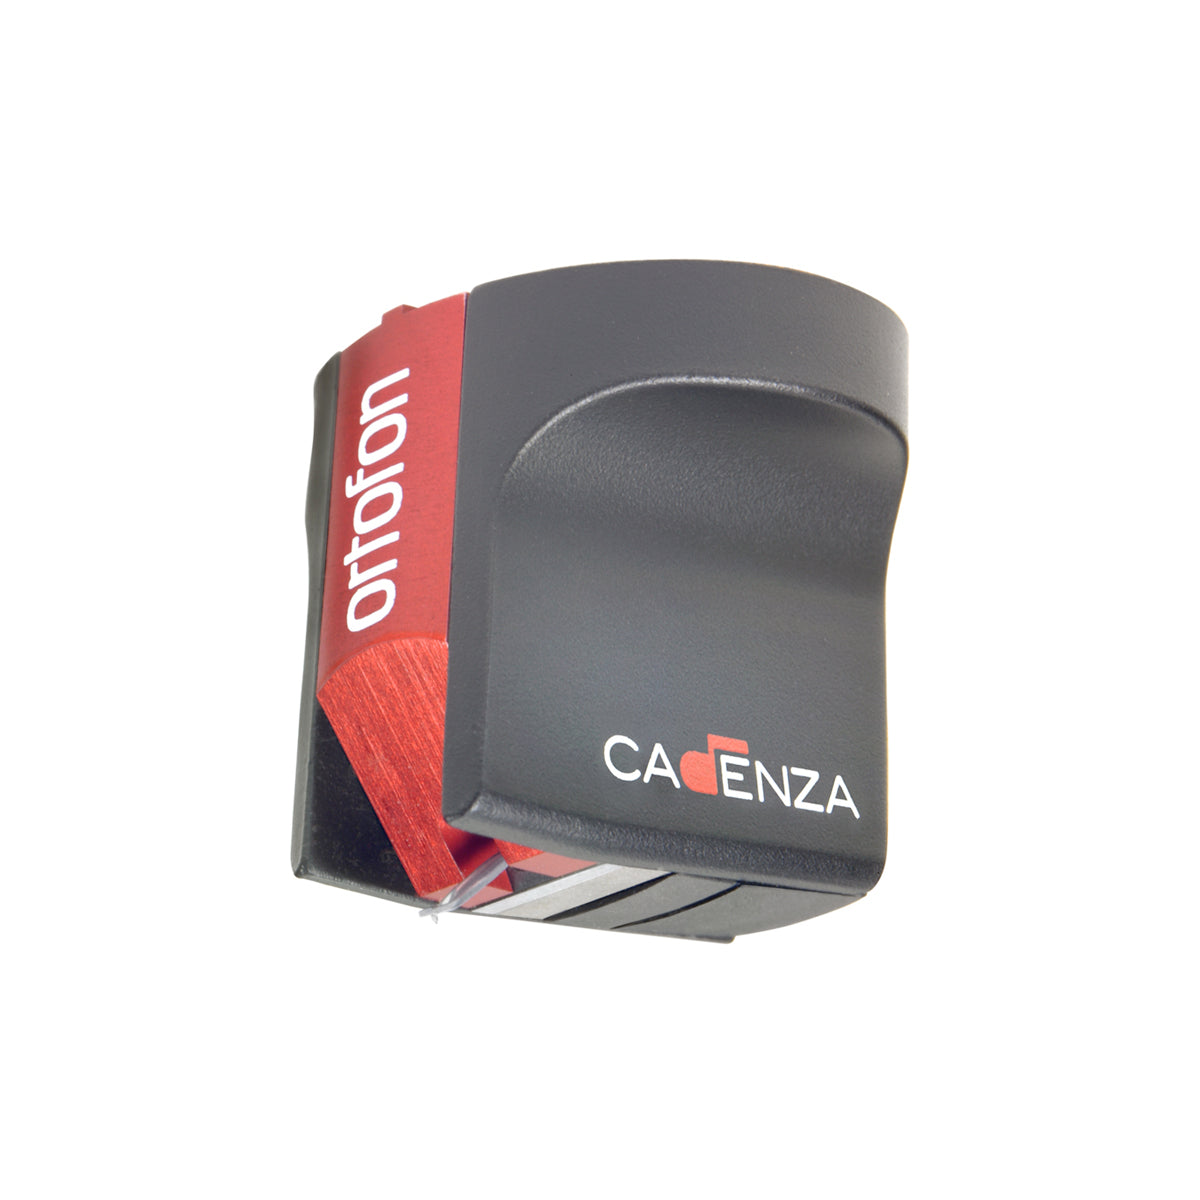 Ortofon Cadenza Red MC Cartridge - The Audio Experts